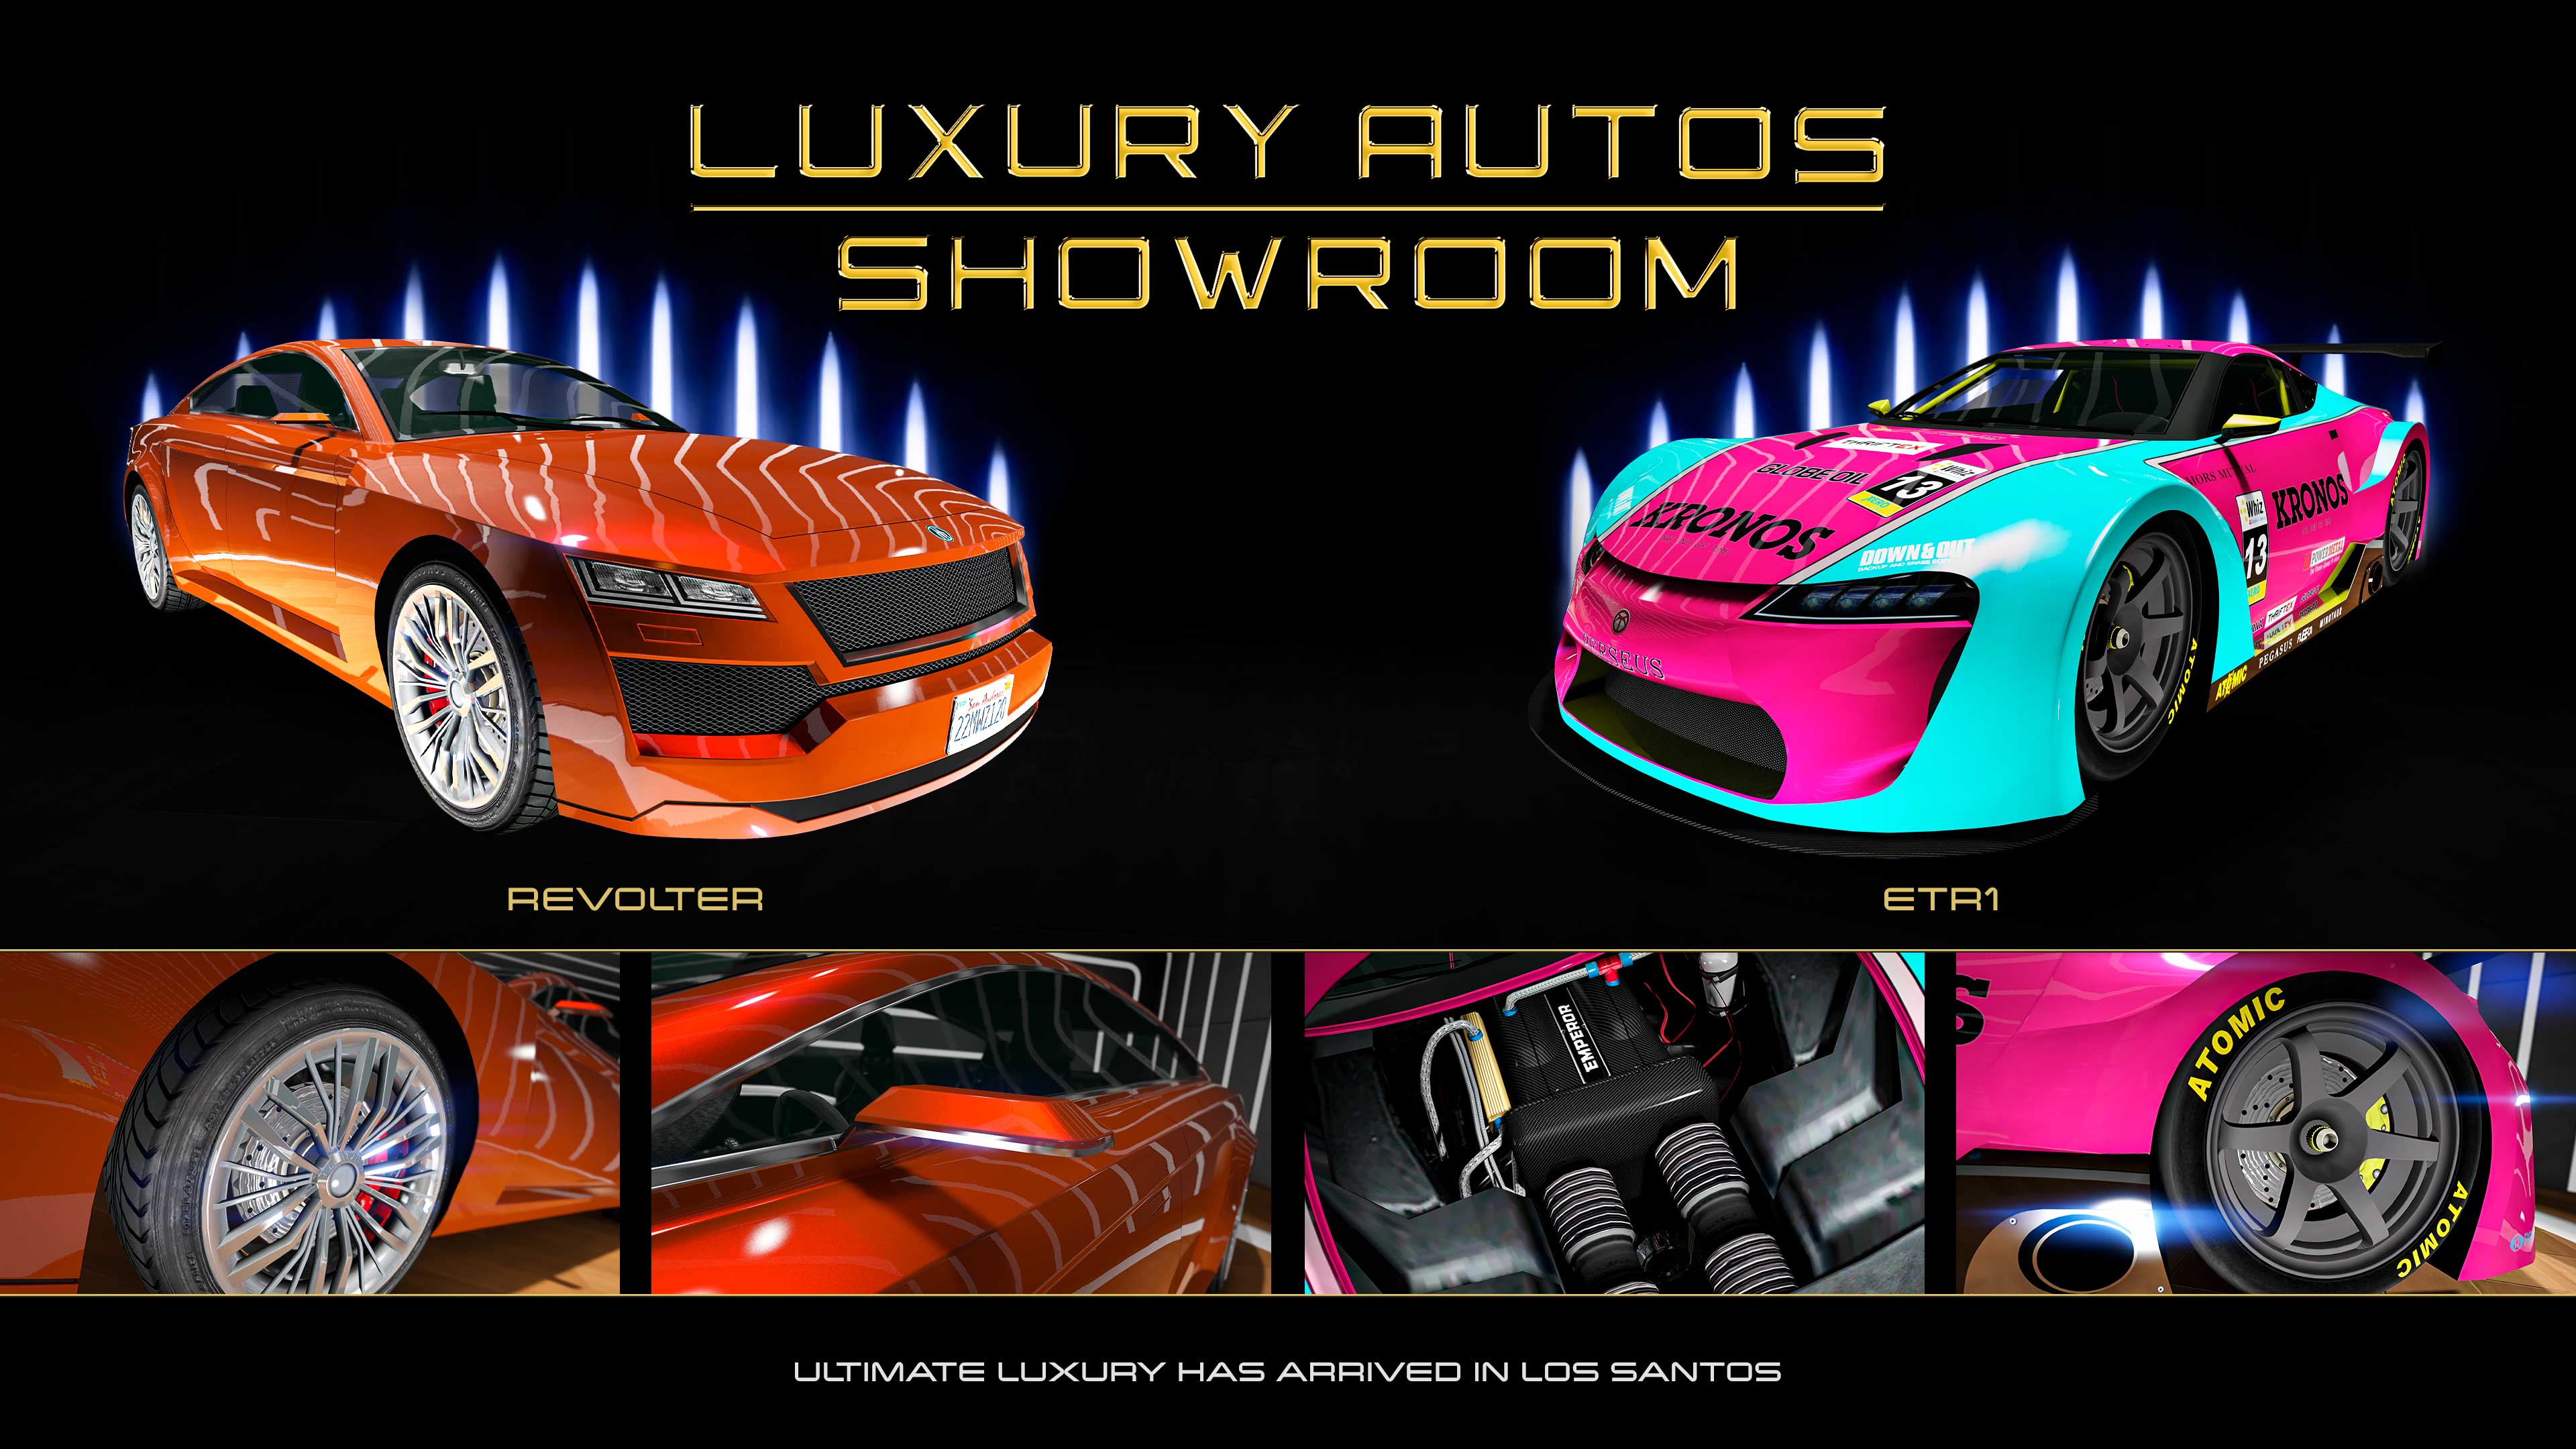 Poster dell’autosalone Luxury Autos Showroom con la Übermacht Revolter e la Emperor ETR1